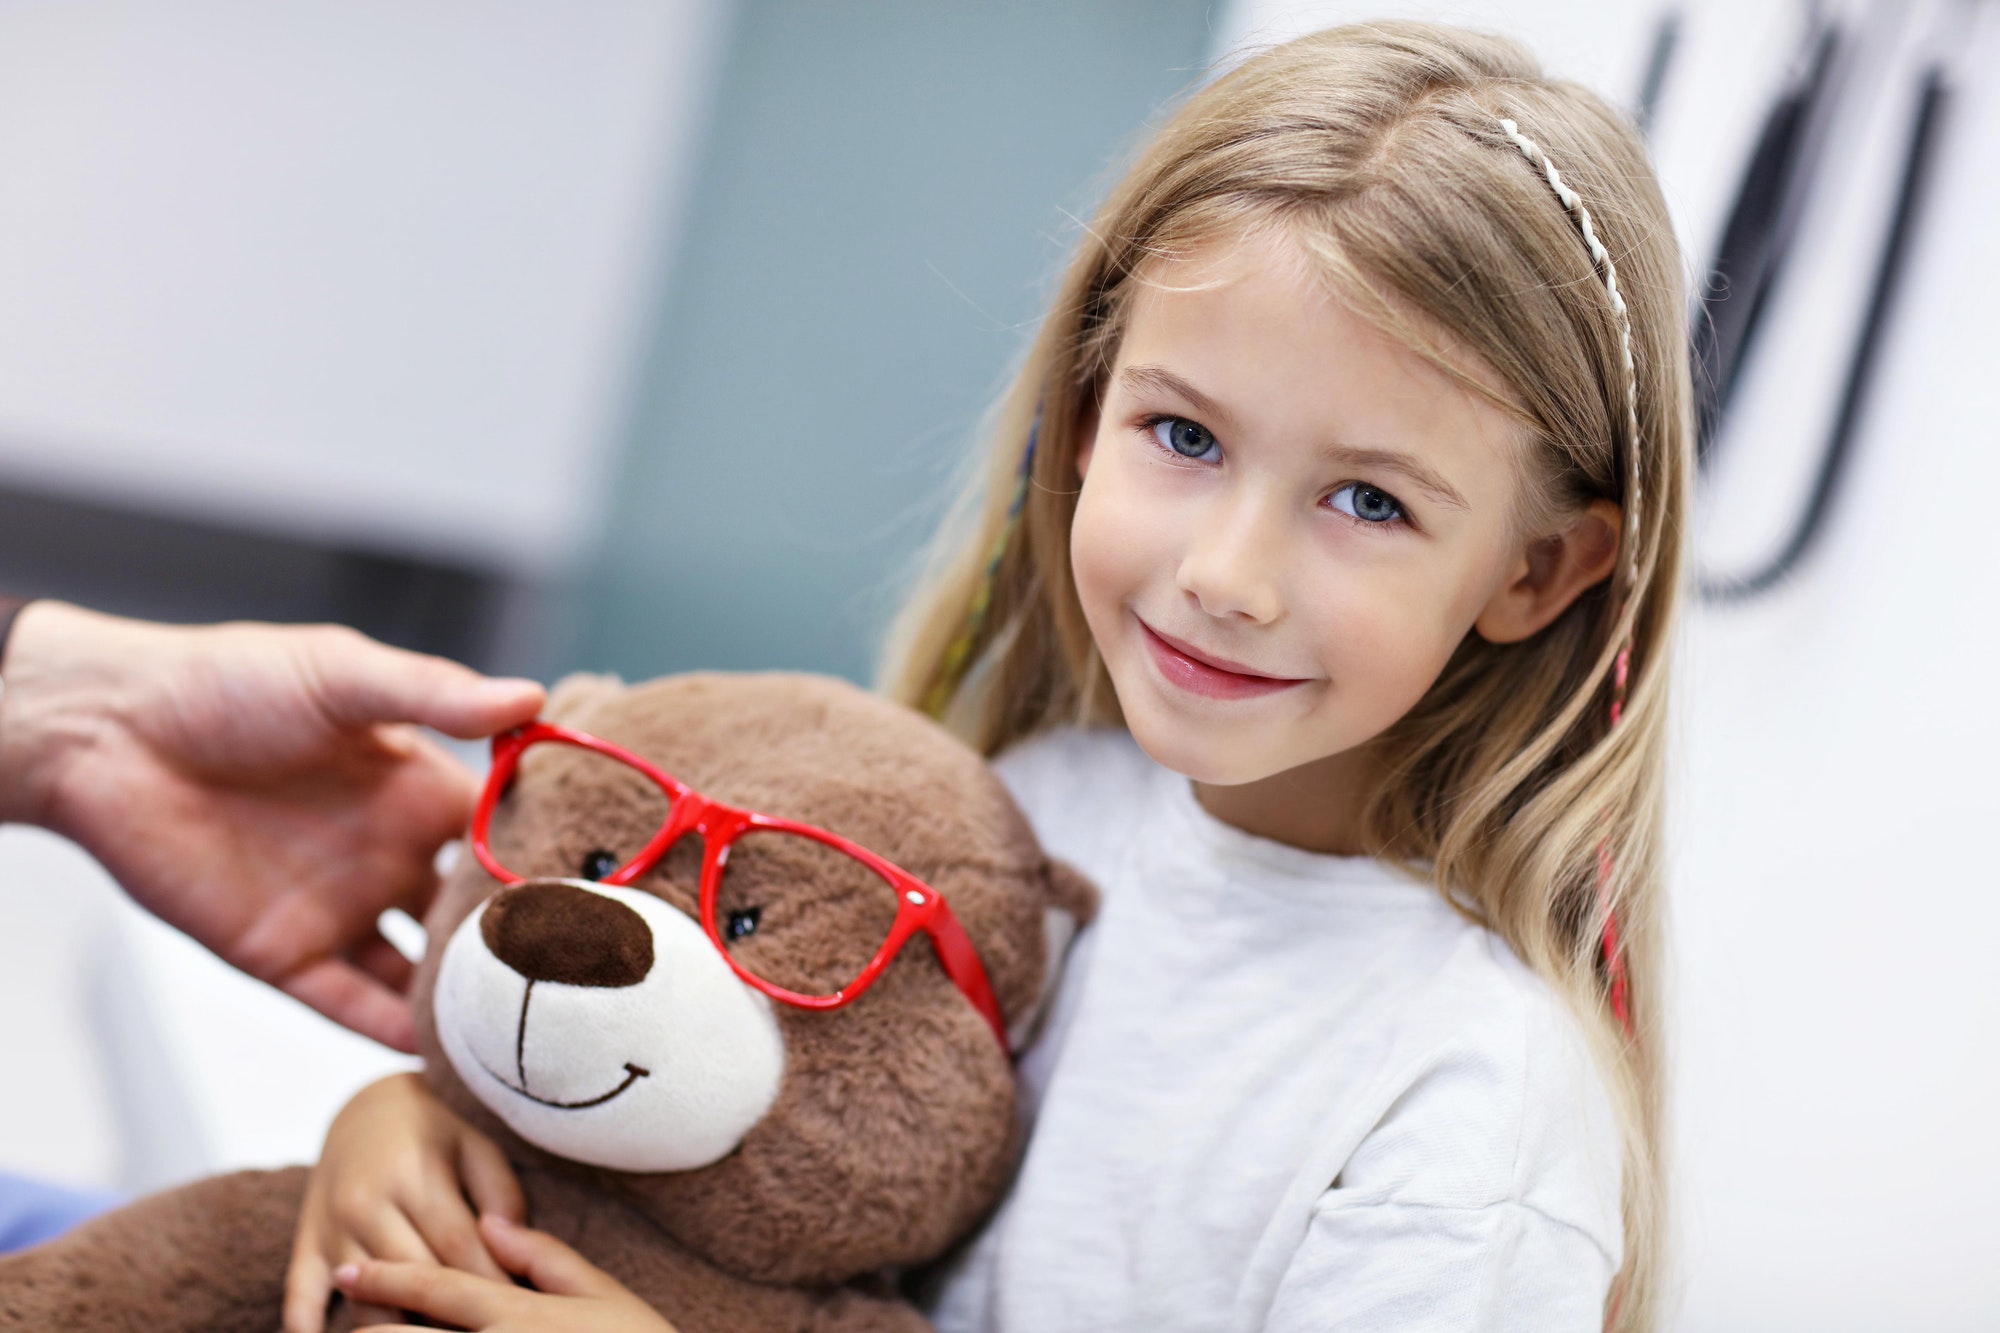 Child male optometrist examines eyesight of little girl